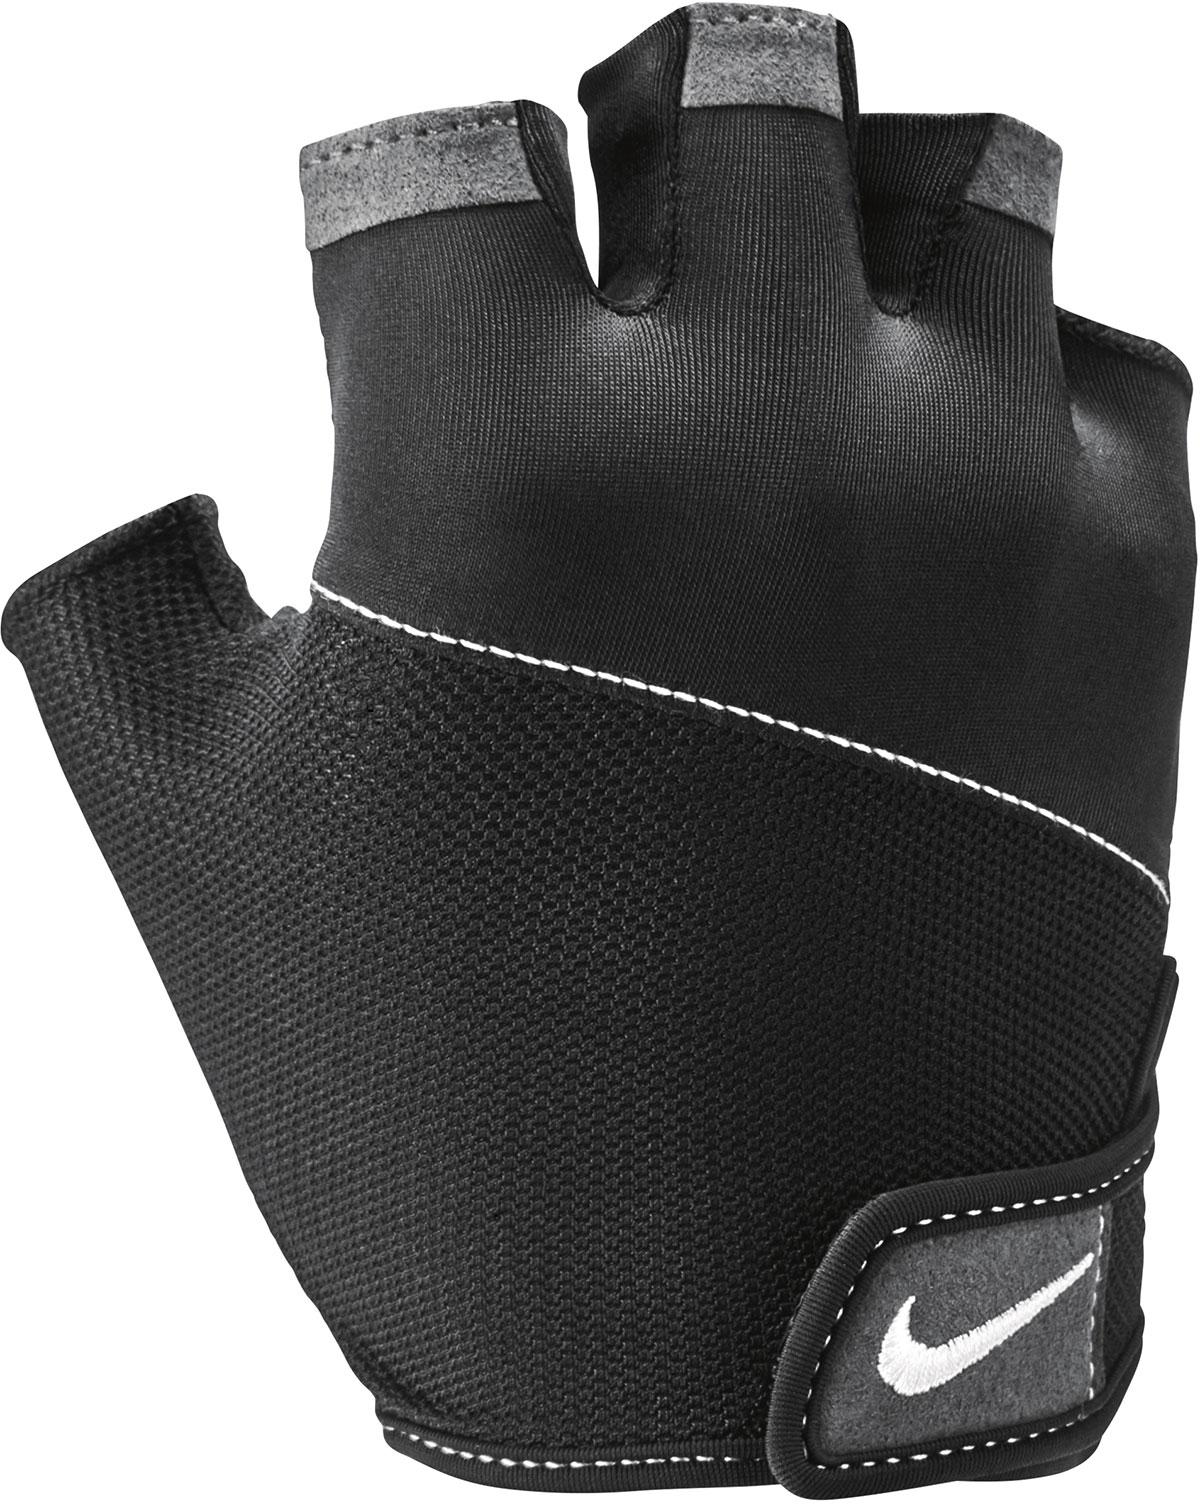 Nike Womens Gym Elemental Fitness Gloves - Black/white